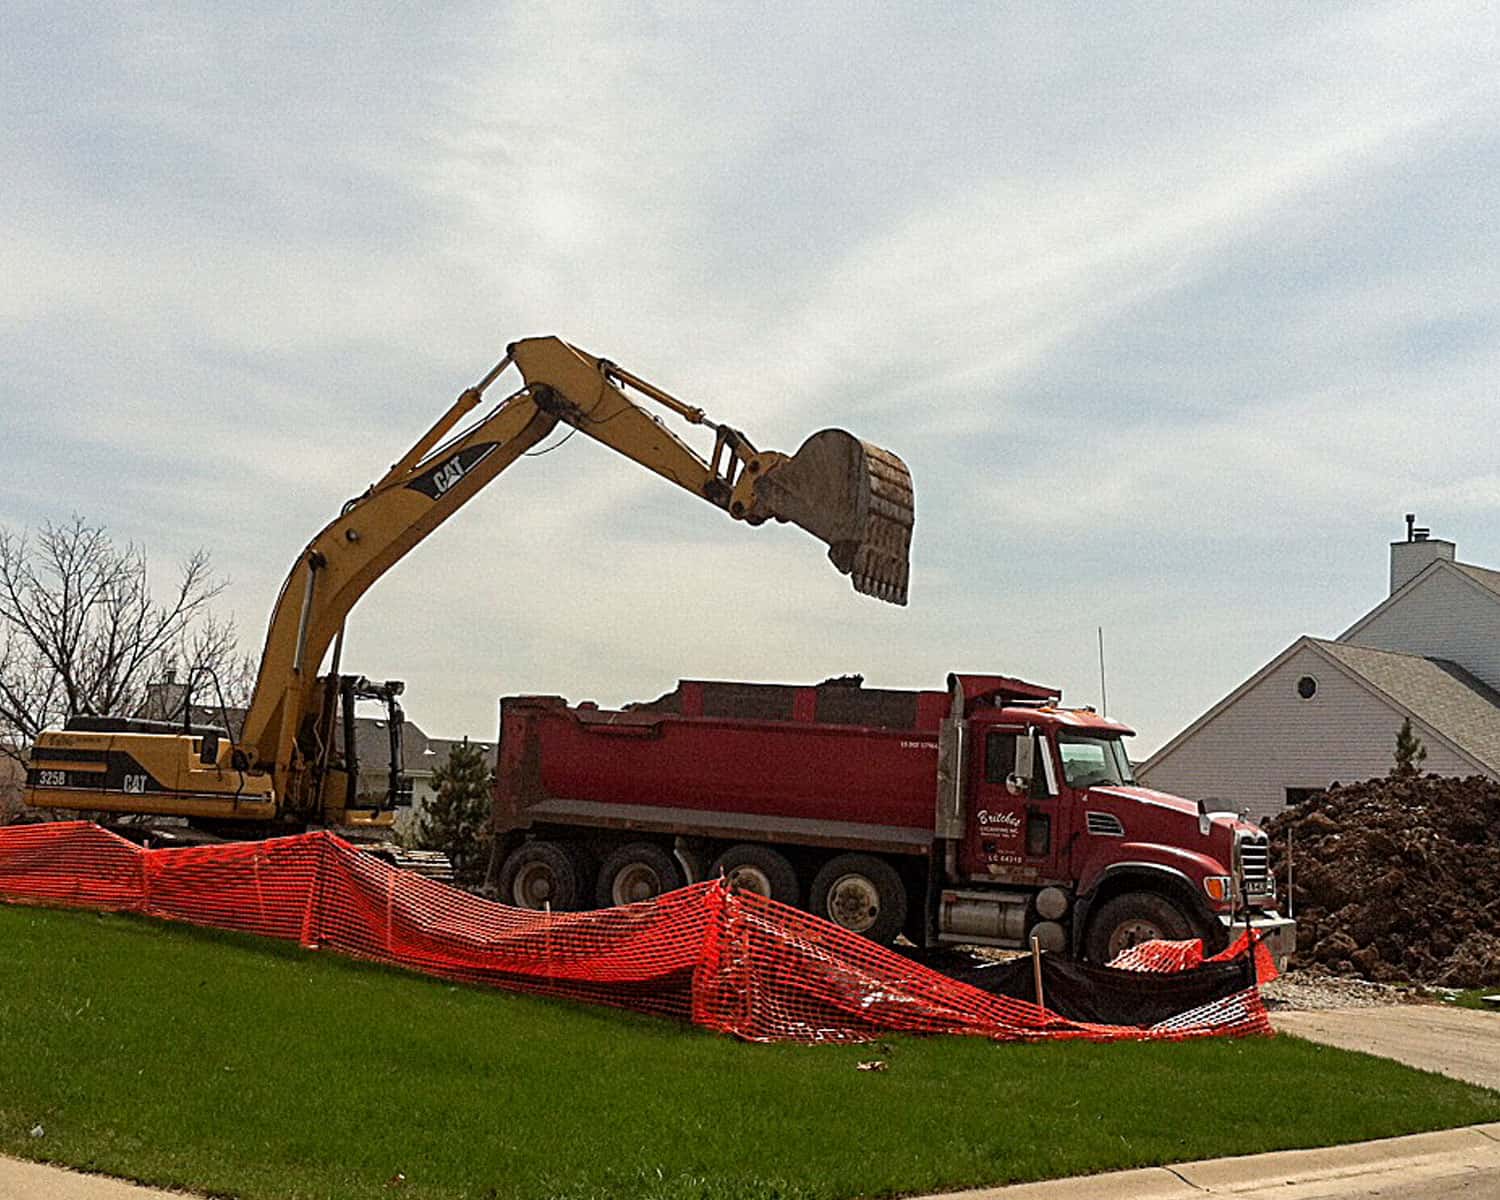 Lemel Homes Teardown, Rebuild, & Infill - Fire Rebuild - excavator dumping a load into a dump truck